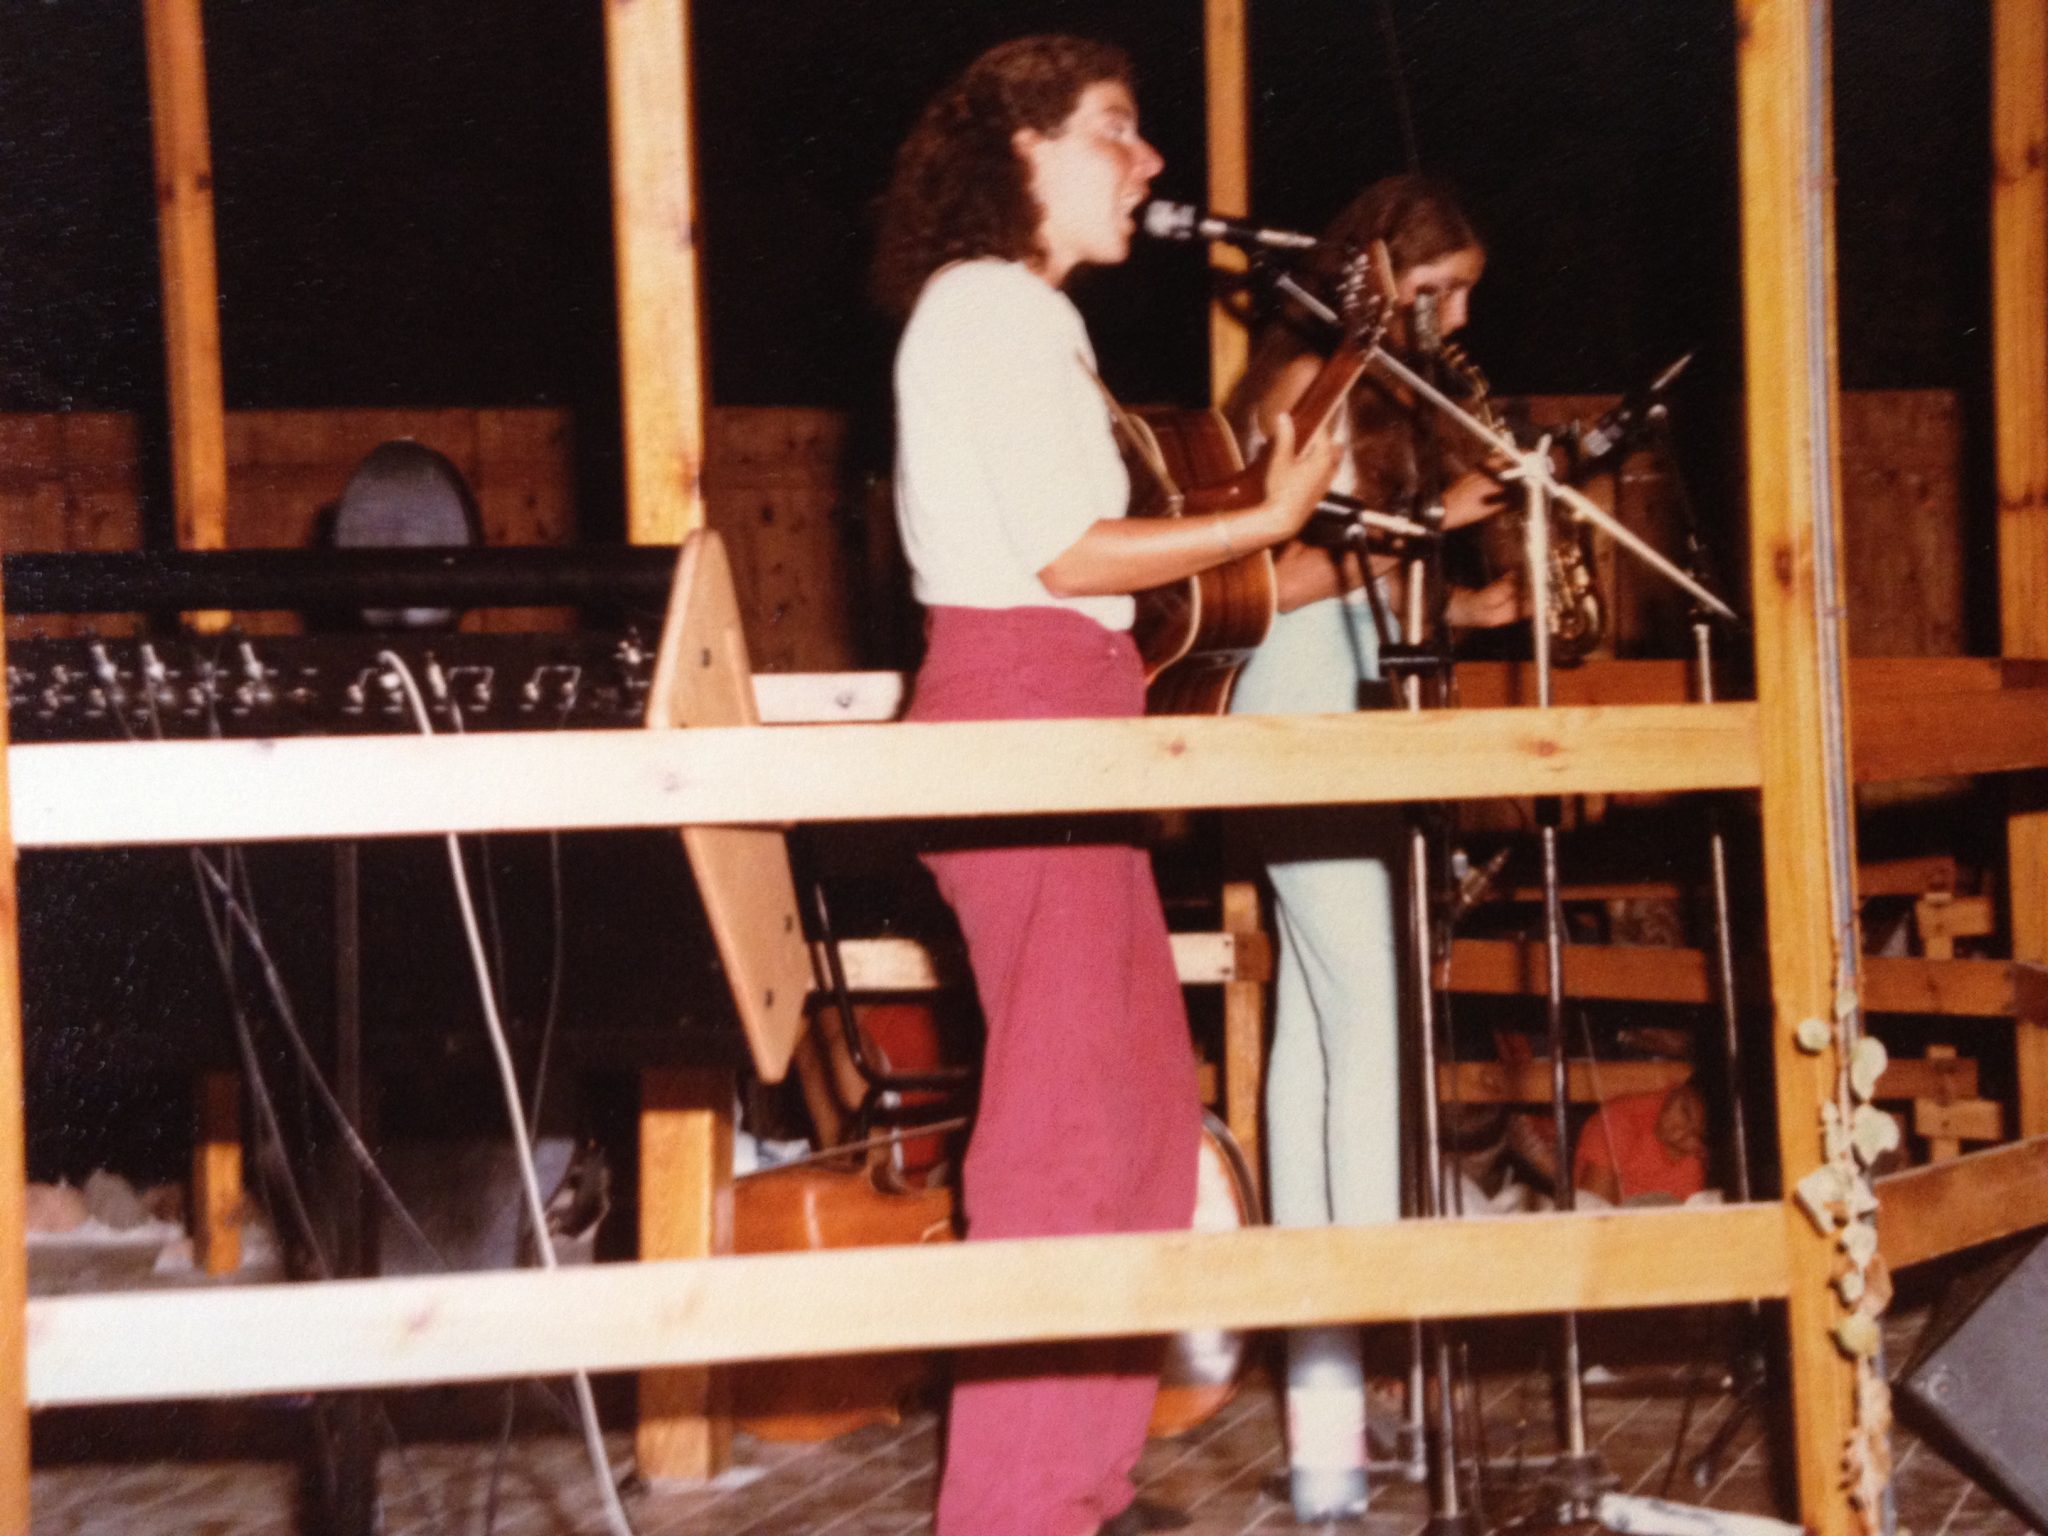 Sardegna 1980 w/Laura Culver